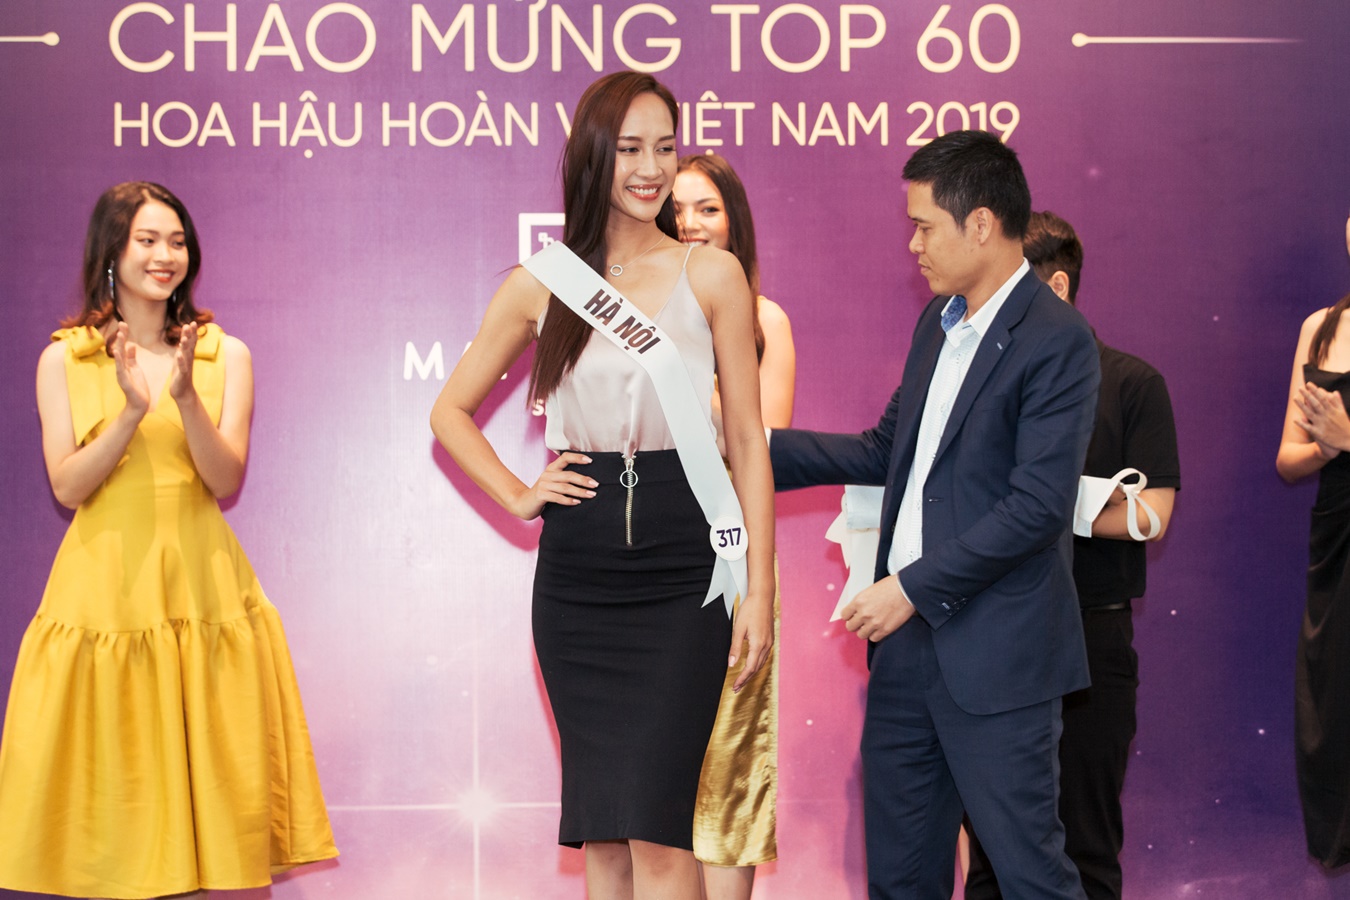 Le trao sash_Top 60 Hoa hau Hoan vu Viet Nam 2019 (69)